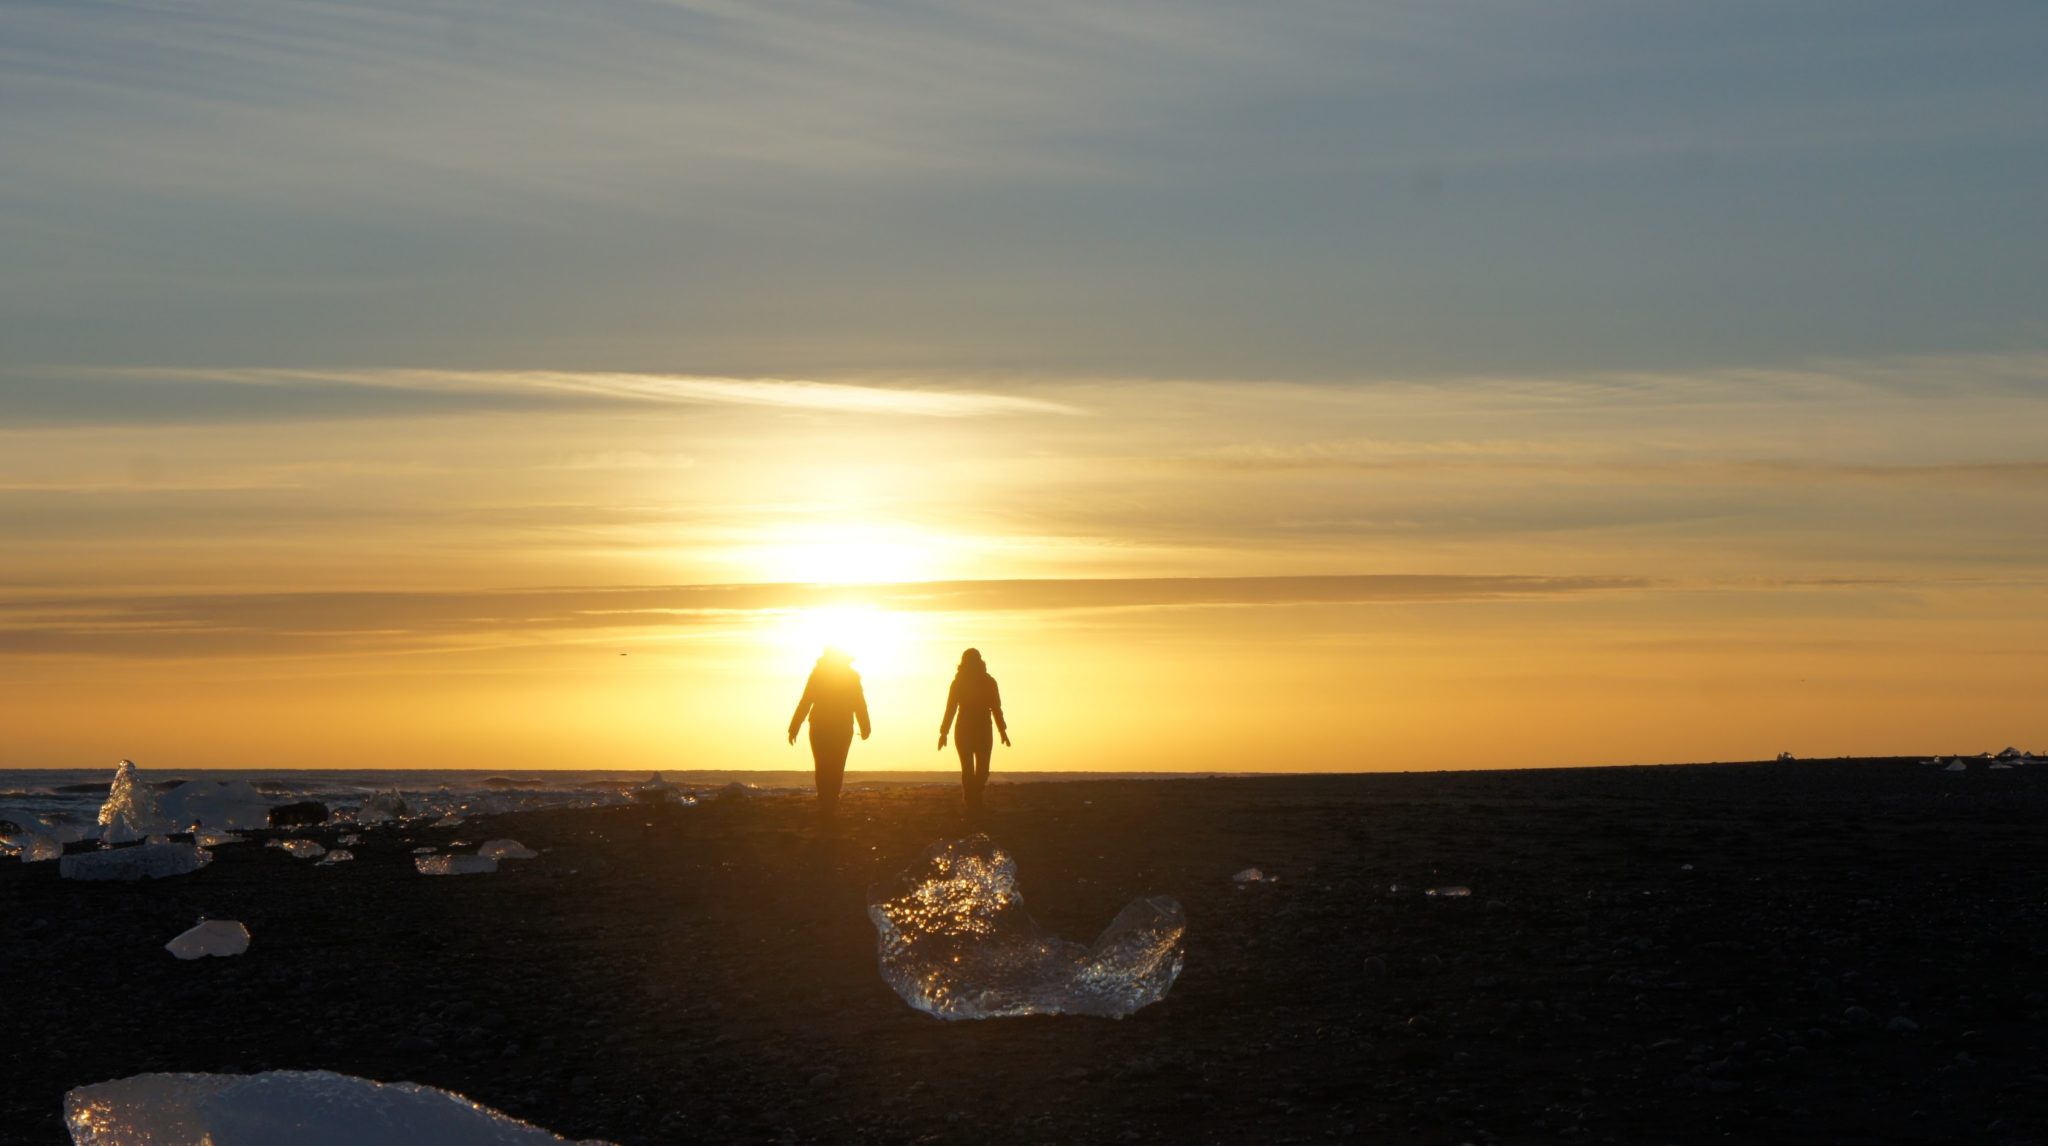 Midnight Sun in Iceland Nature's Most Beautiful Phenomenon